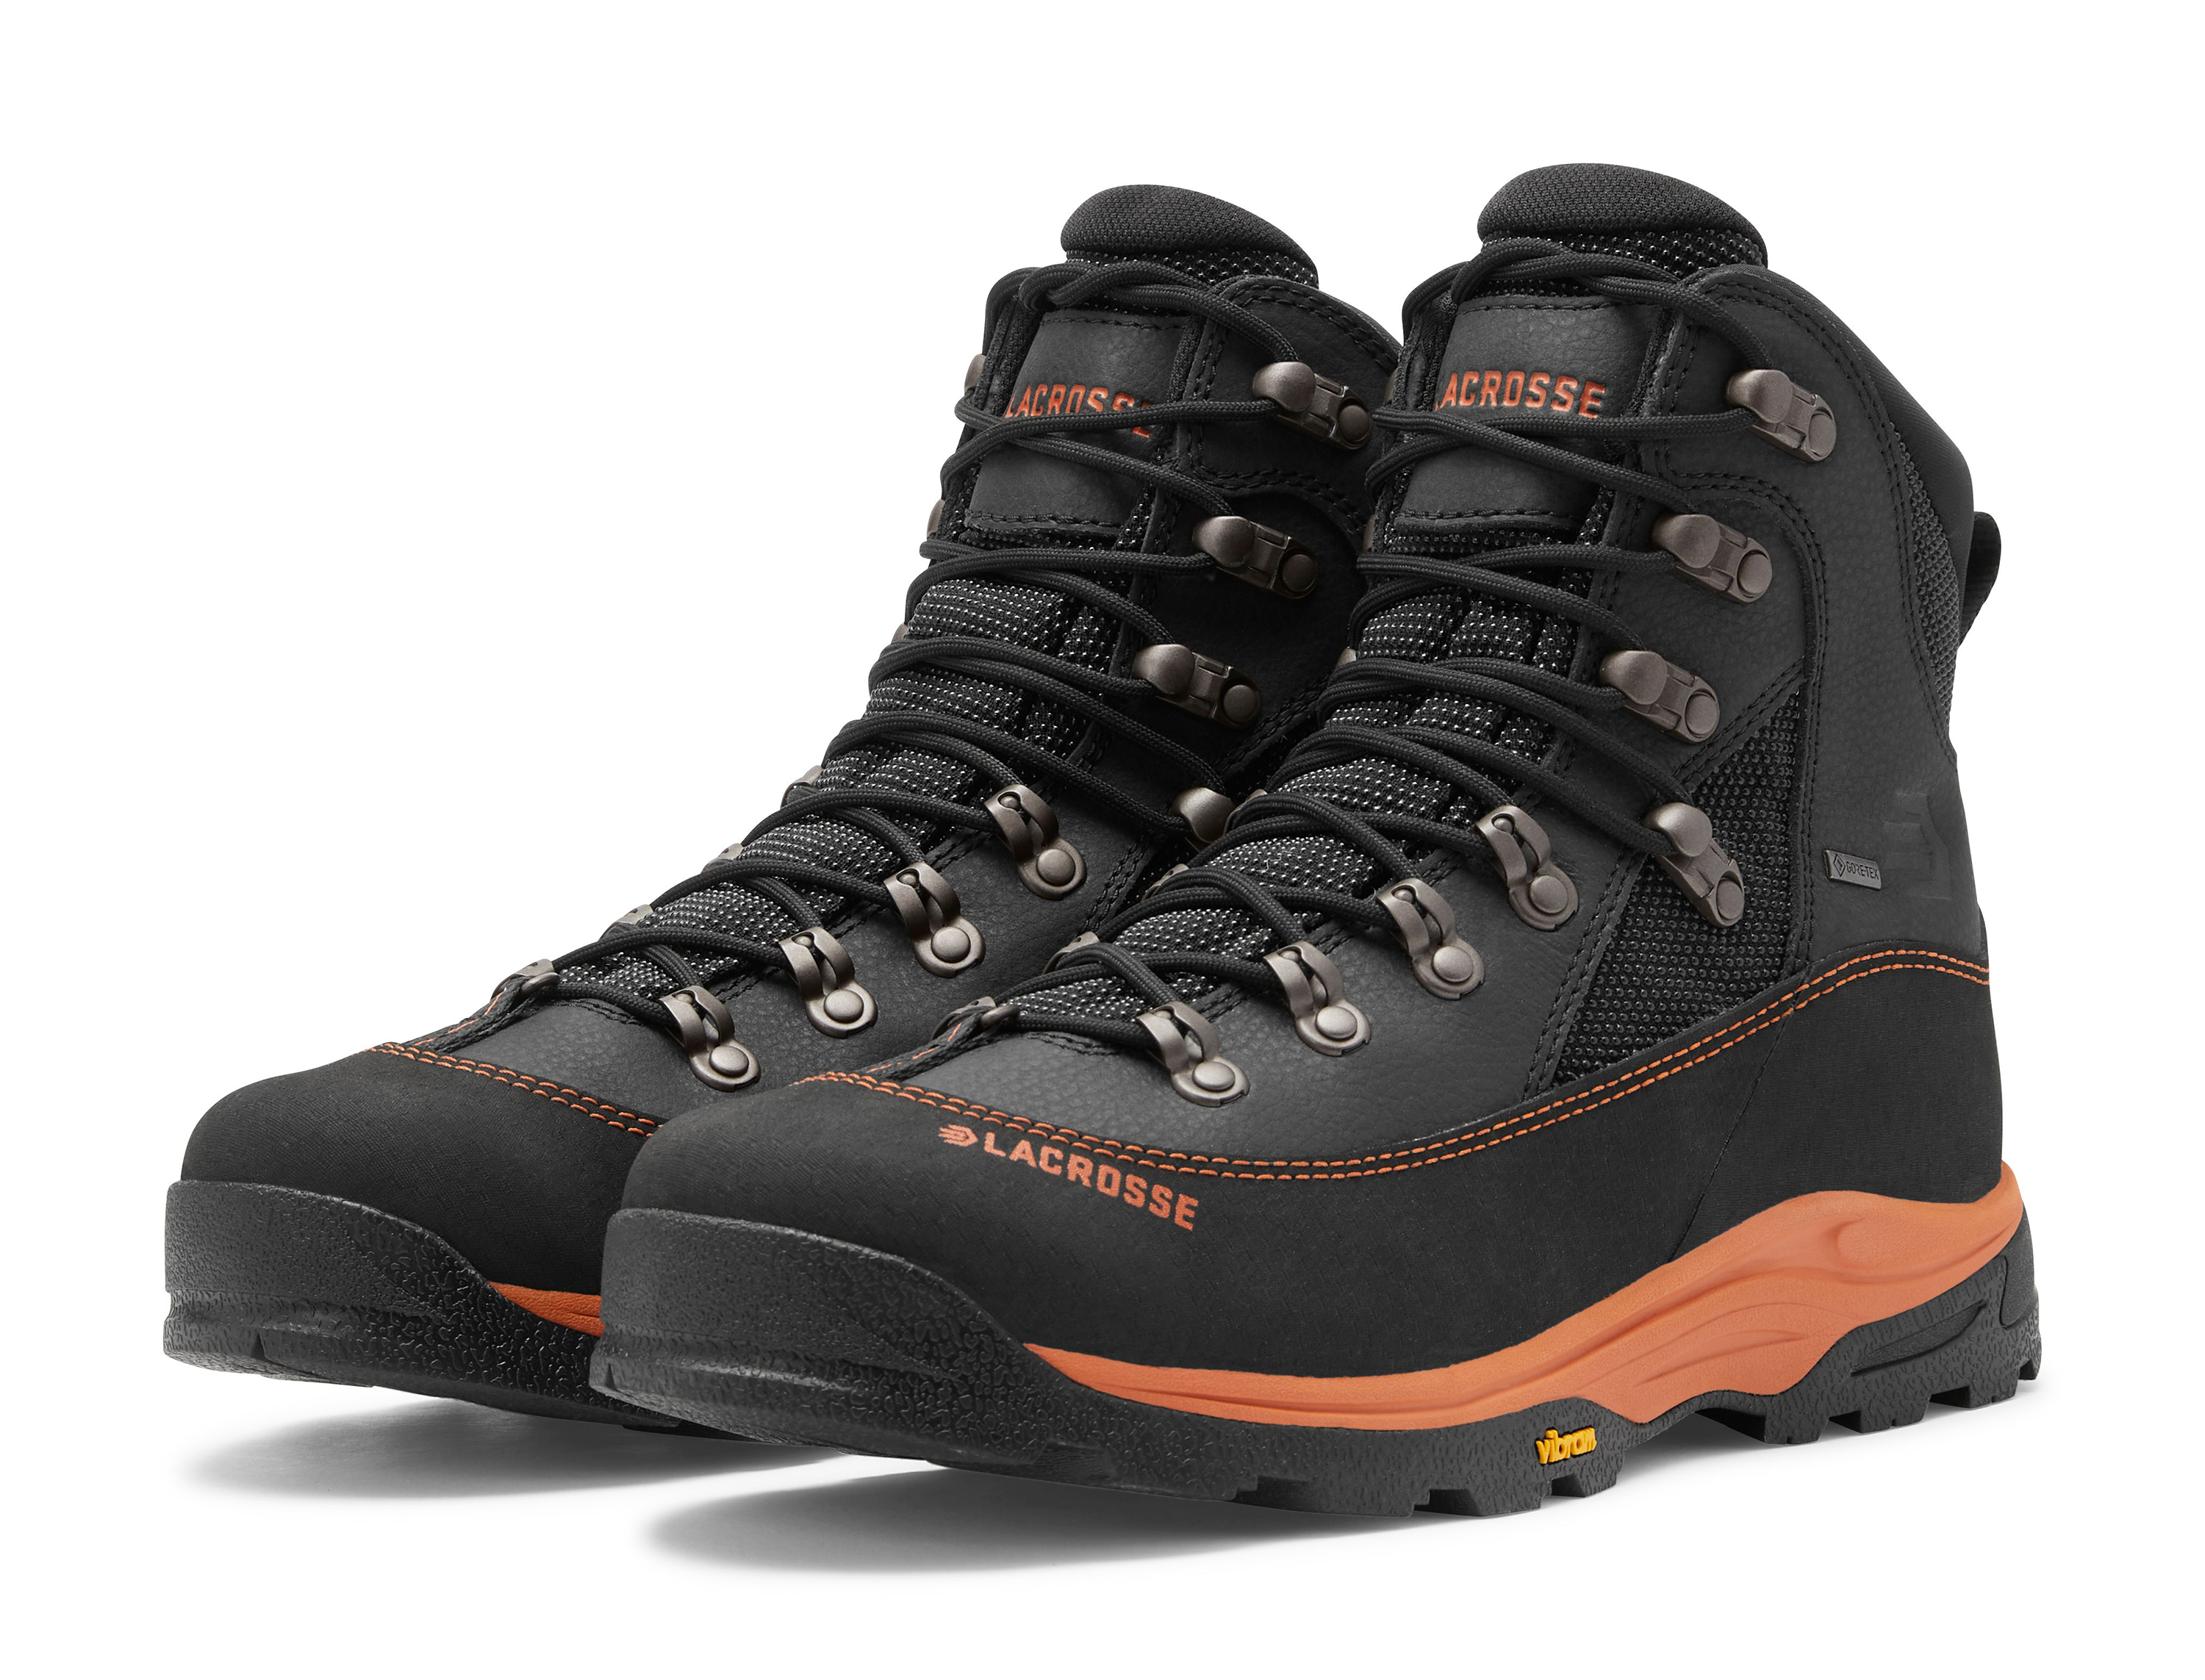 LaCrosse Ursa MS GORE-TEX Hunting Boots for Men - Gunmetal/Orange - 14W